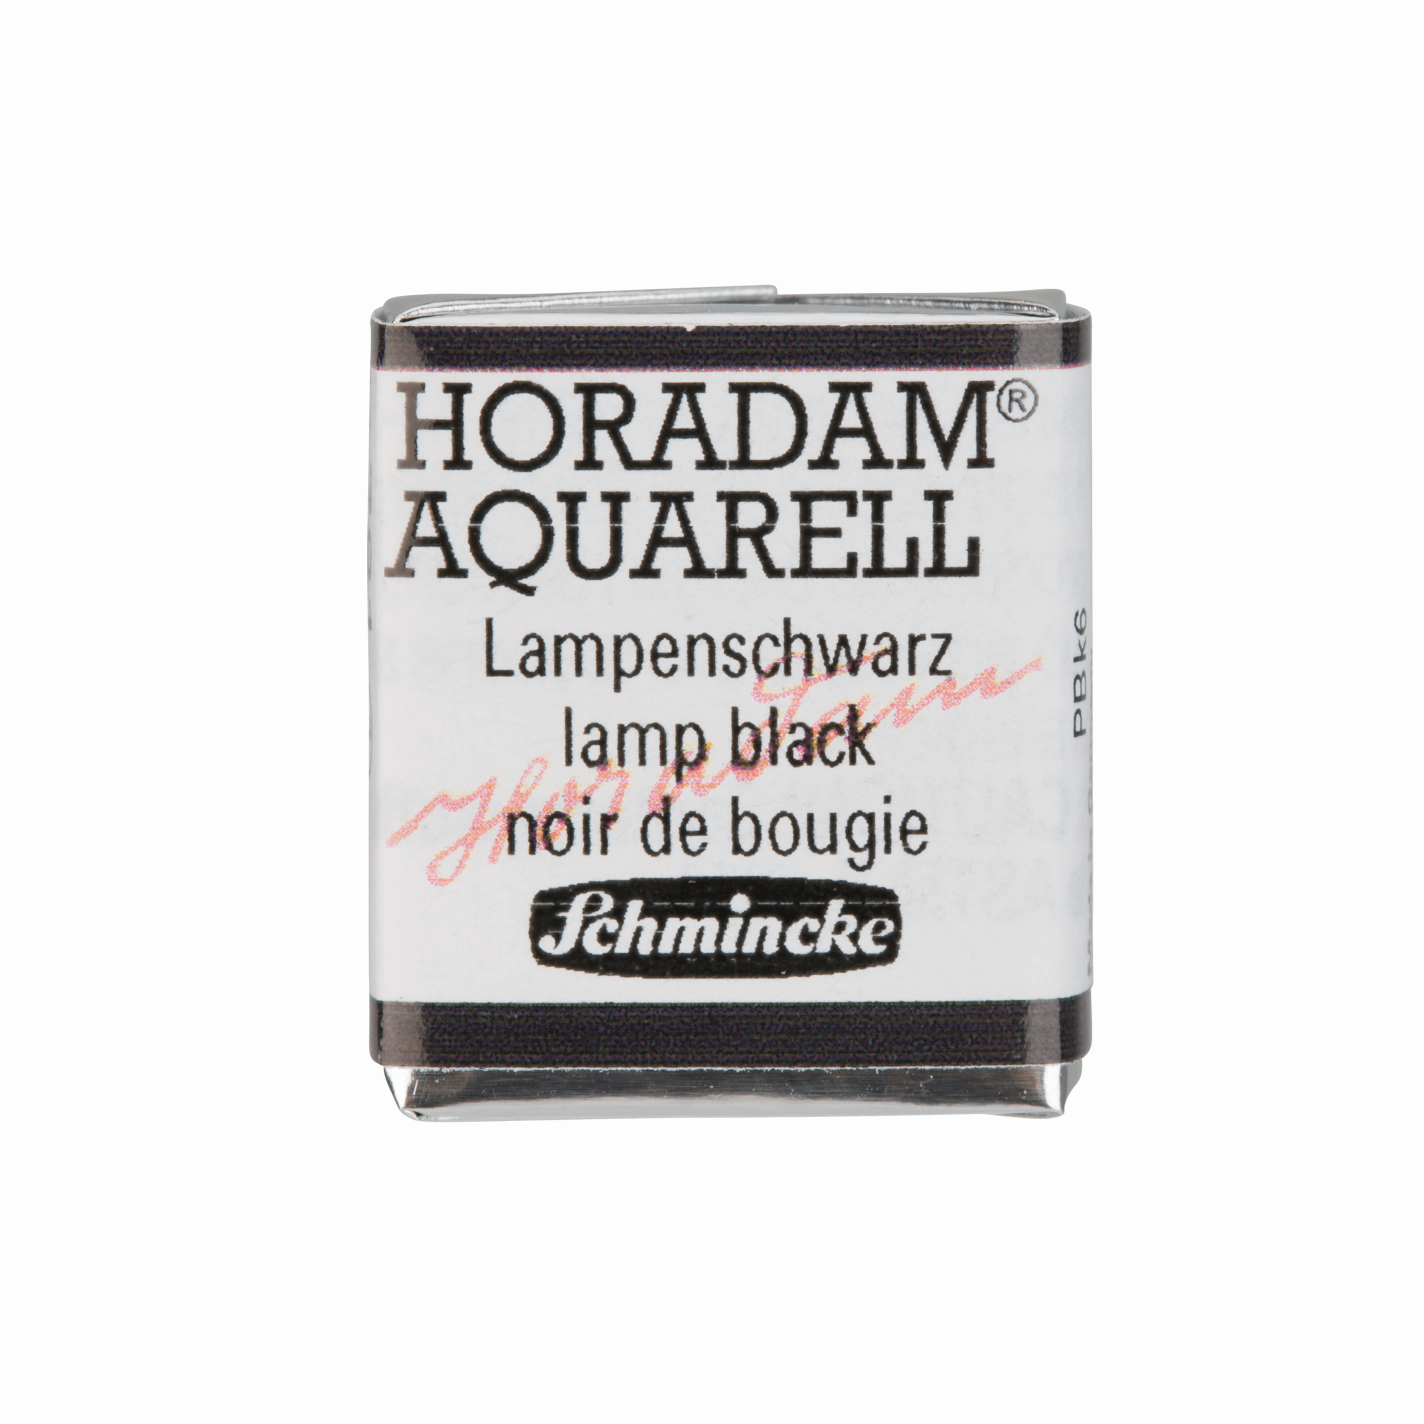 Schmincke Horadam Aquarell pans 1/2 pan Lamp Black